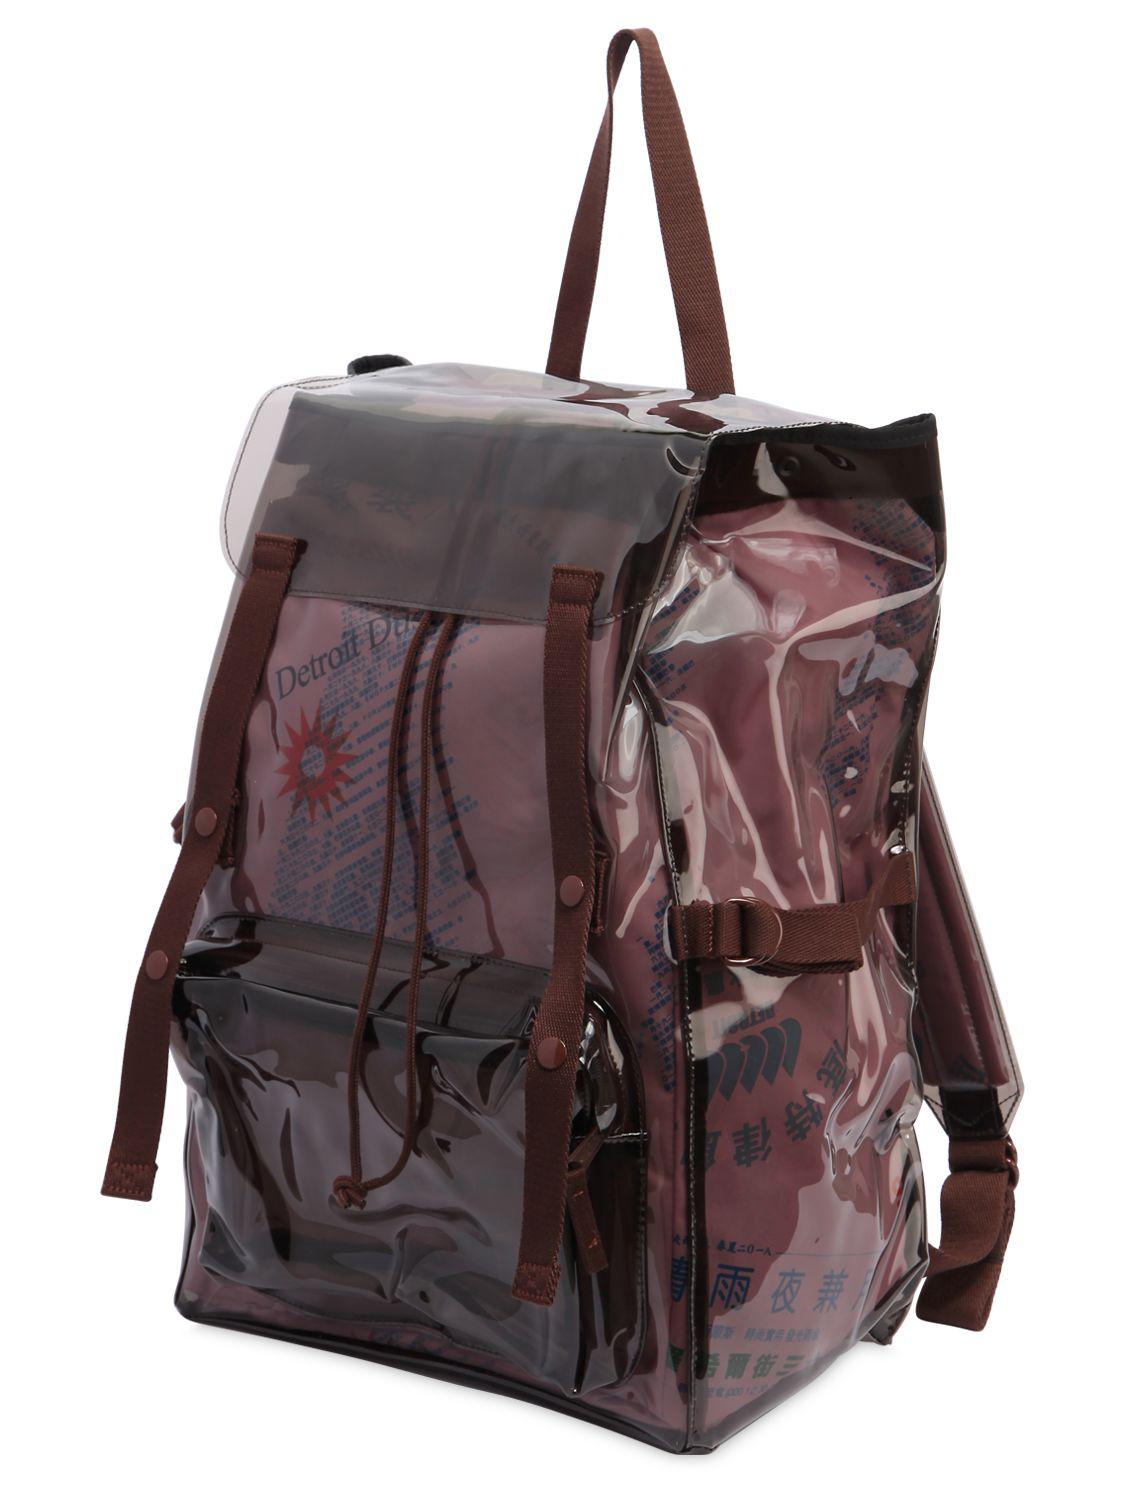 Raf Simons Eastpak Transparent Pvc Backpack in Brown for Men - Lyst